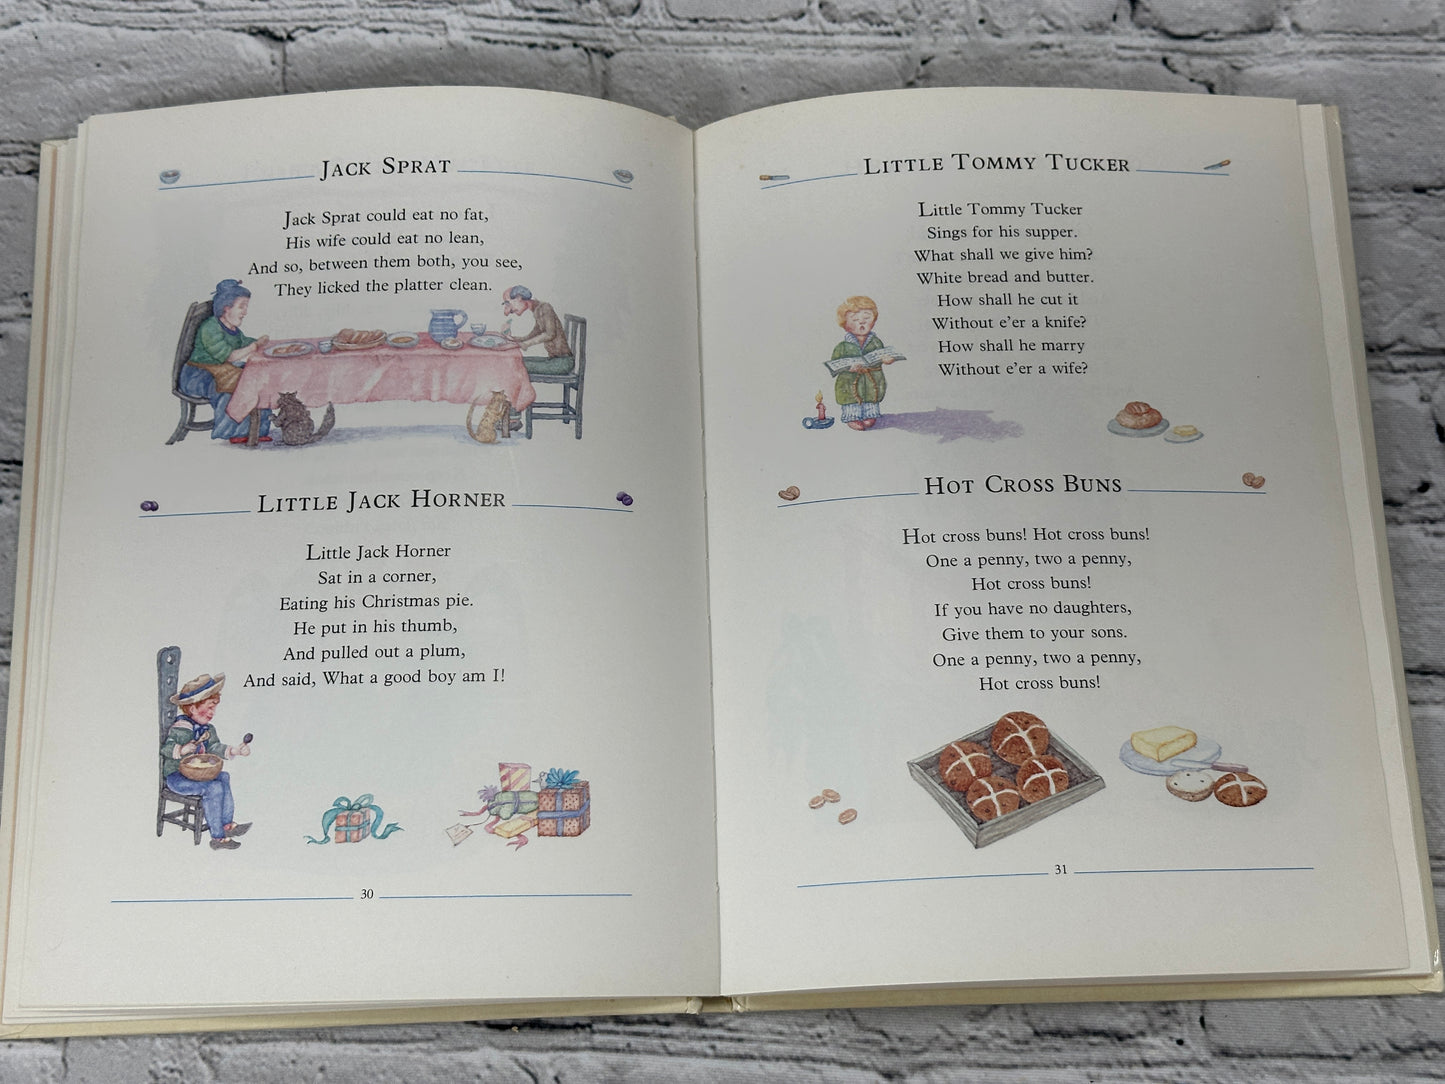 Favorite Nursery Rhyme illustrated by Peter Bowman [1988]